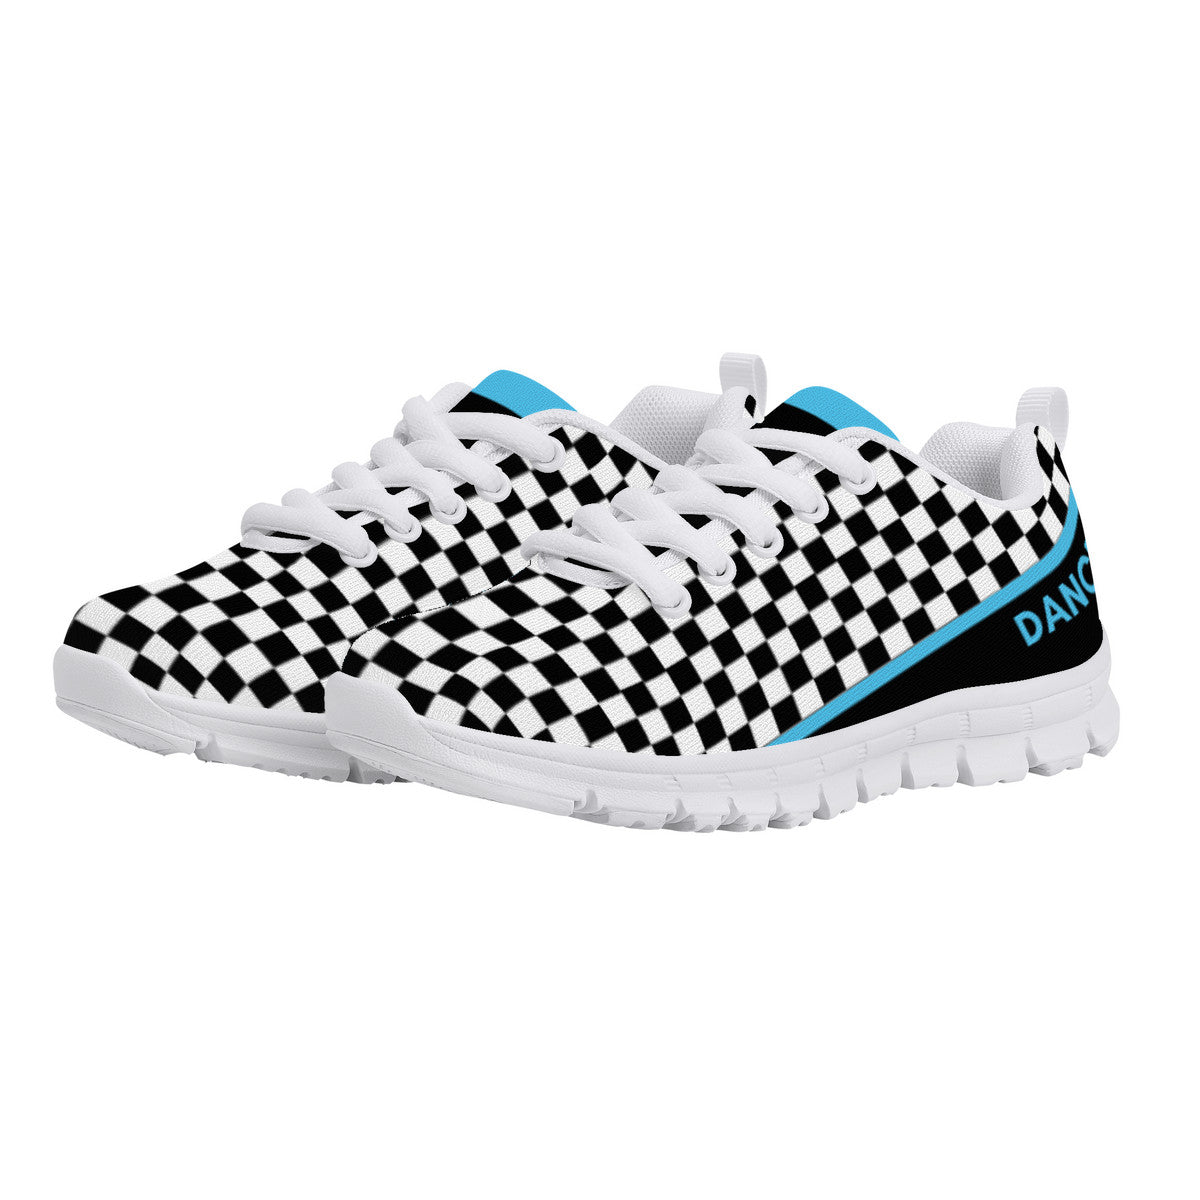 Kids Dance Sneakers - Checkered Black - White - Blue